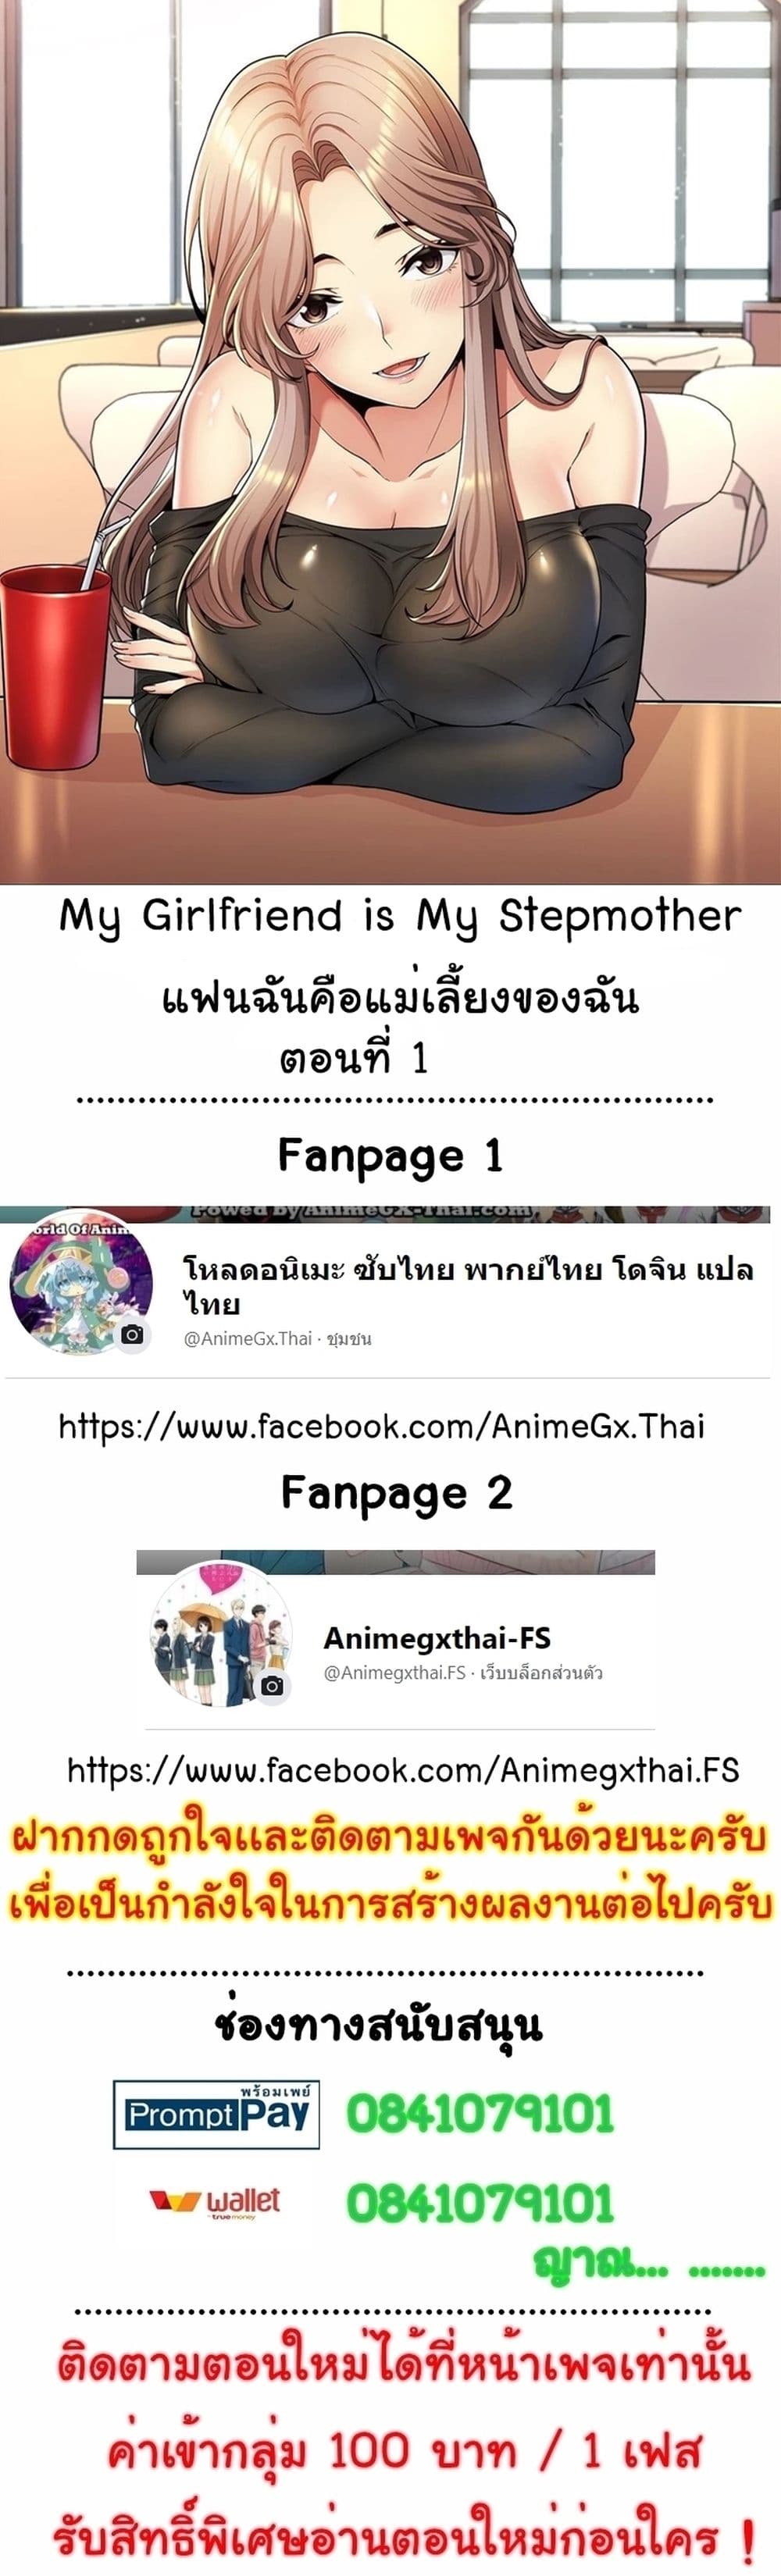 My Girlfriend is My Stepmother1 (1)